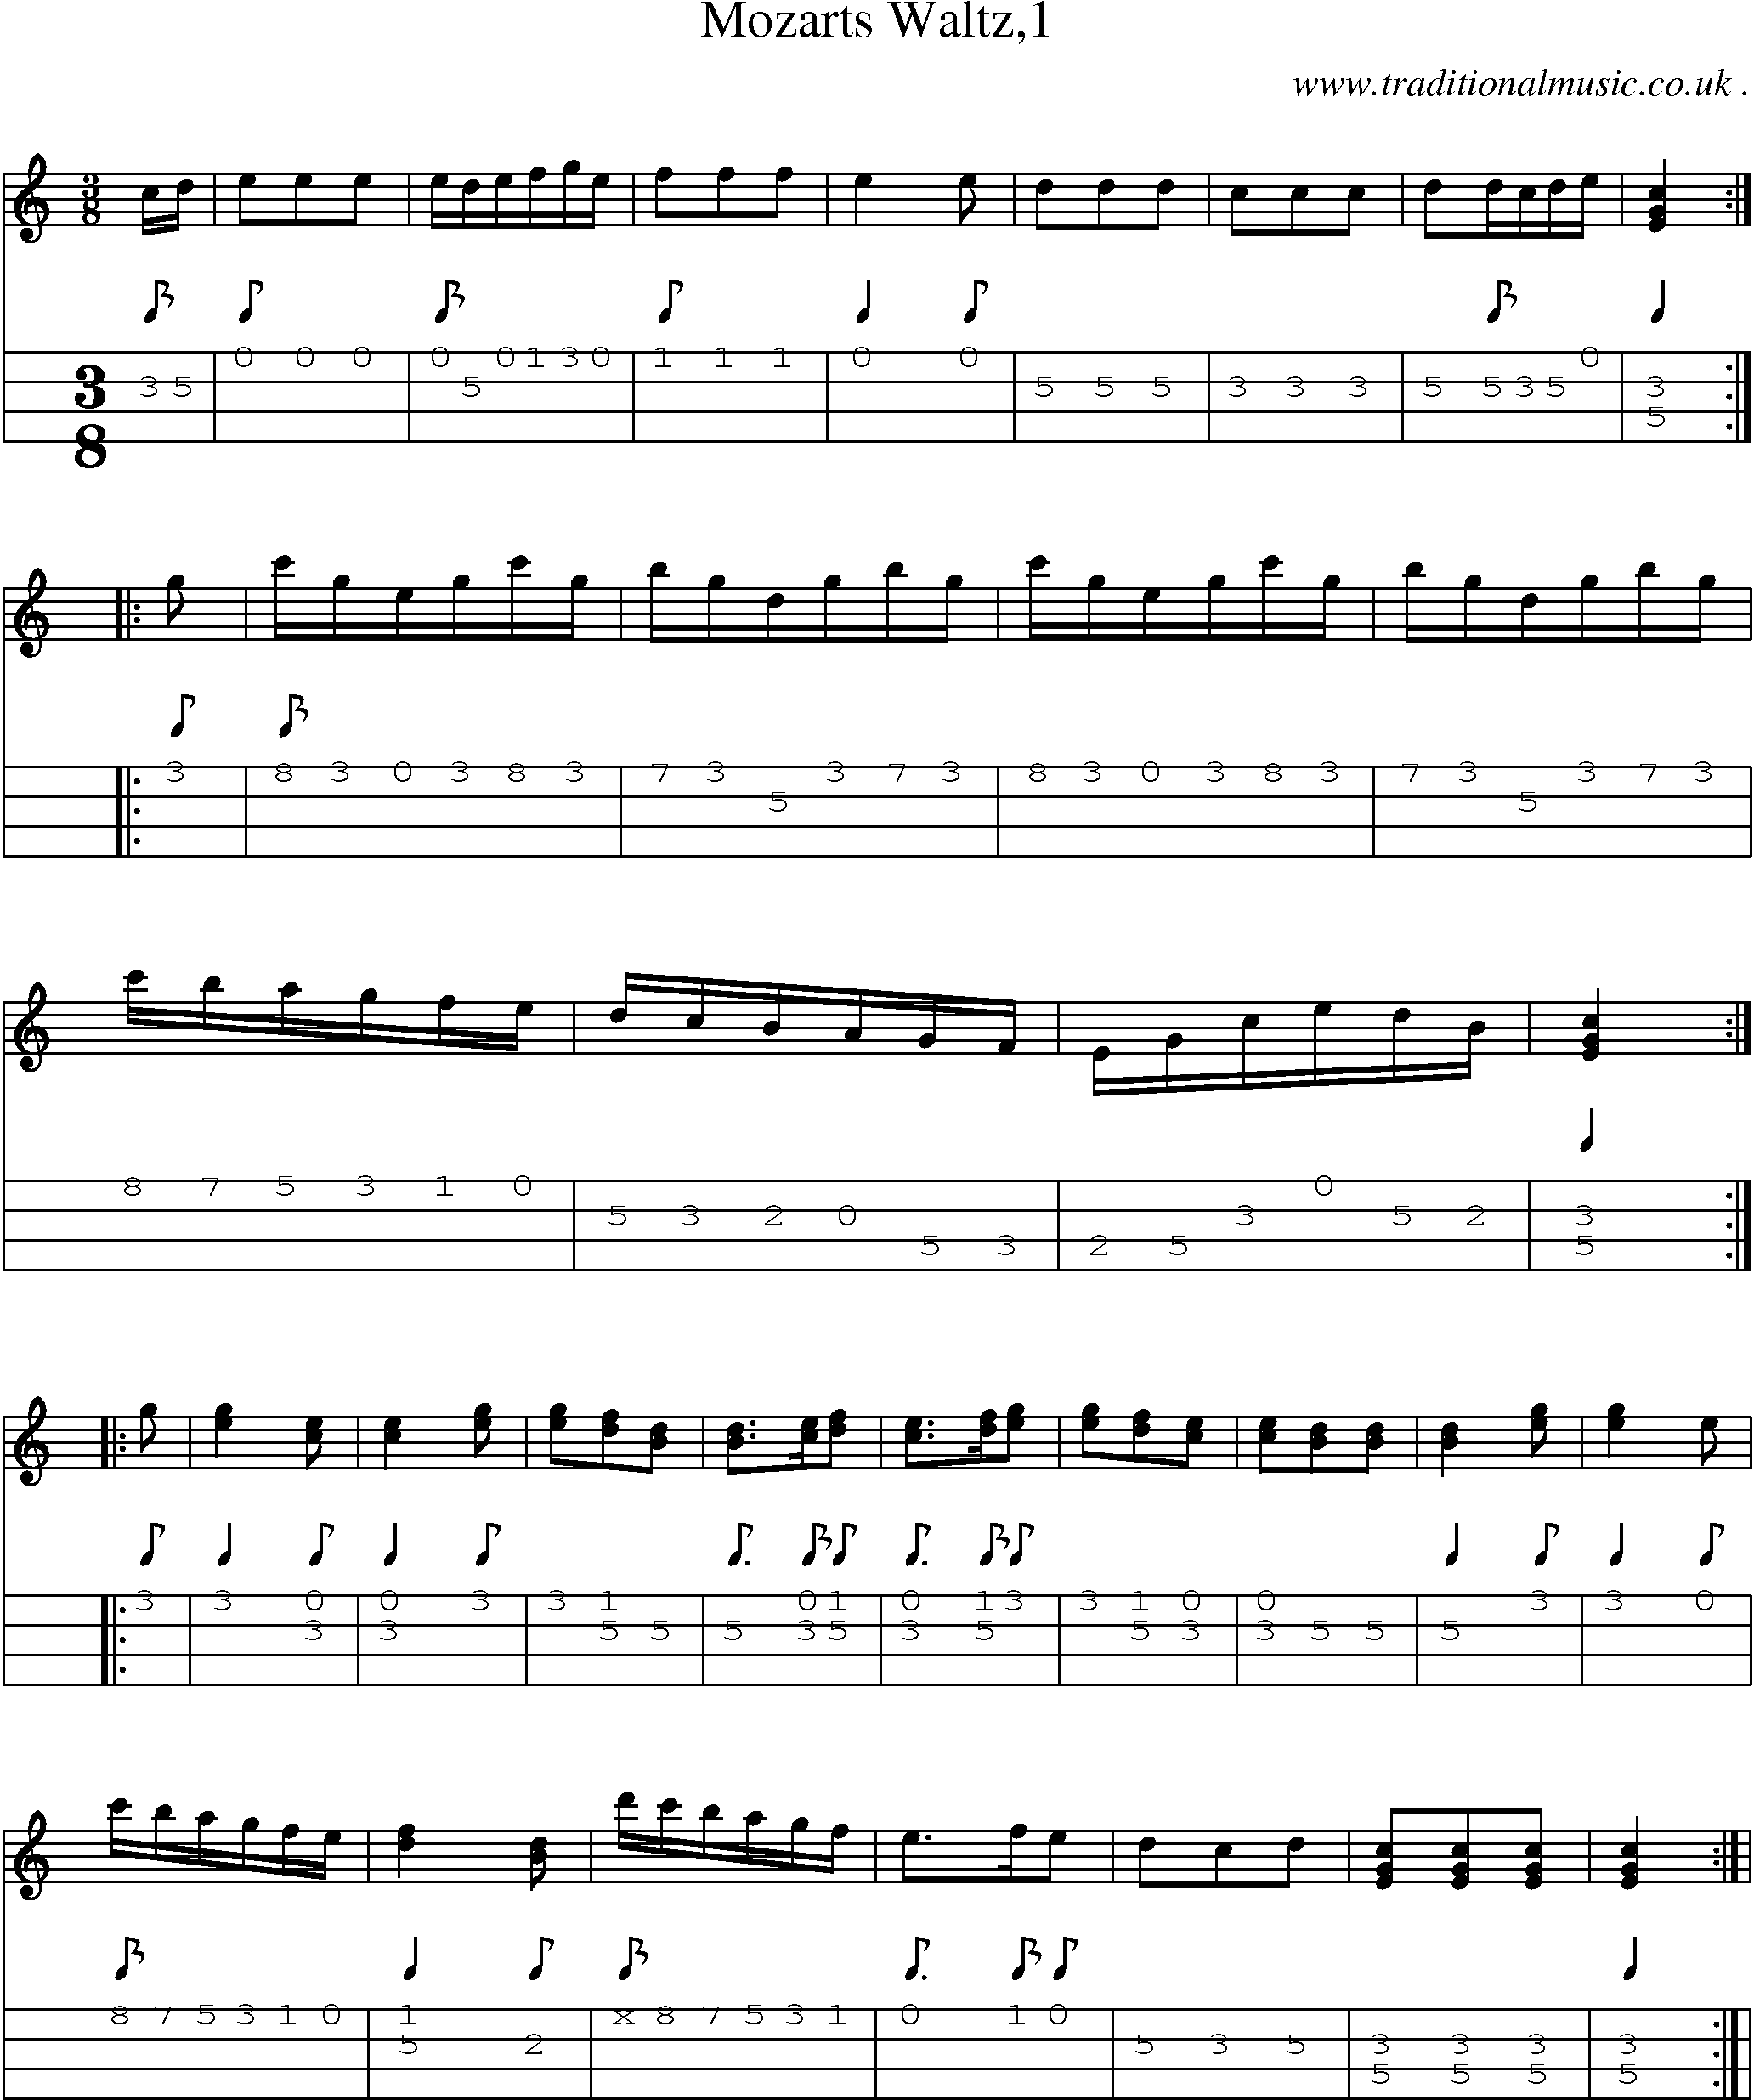 Sheet-Music and Mandolin Tabs for Mozarts Waltz1